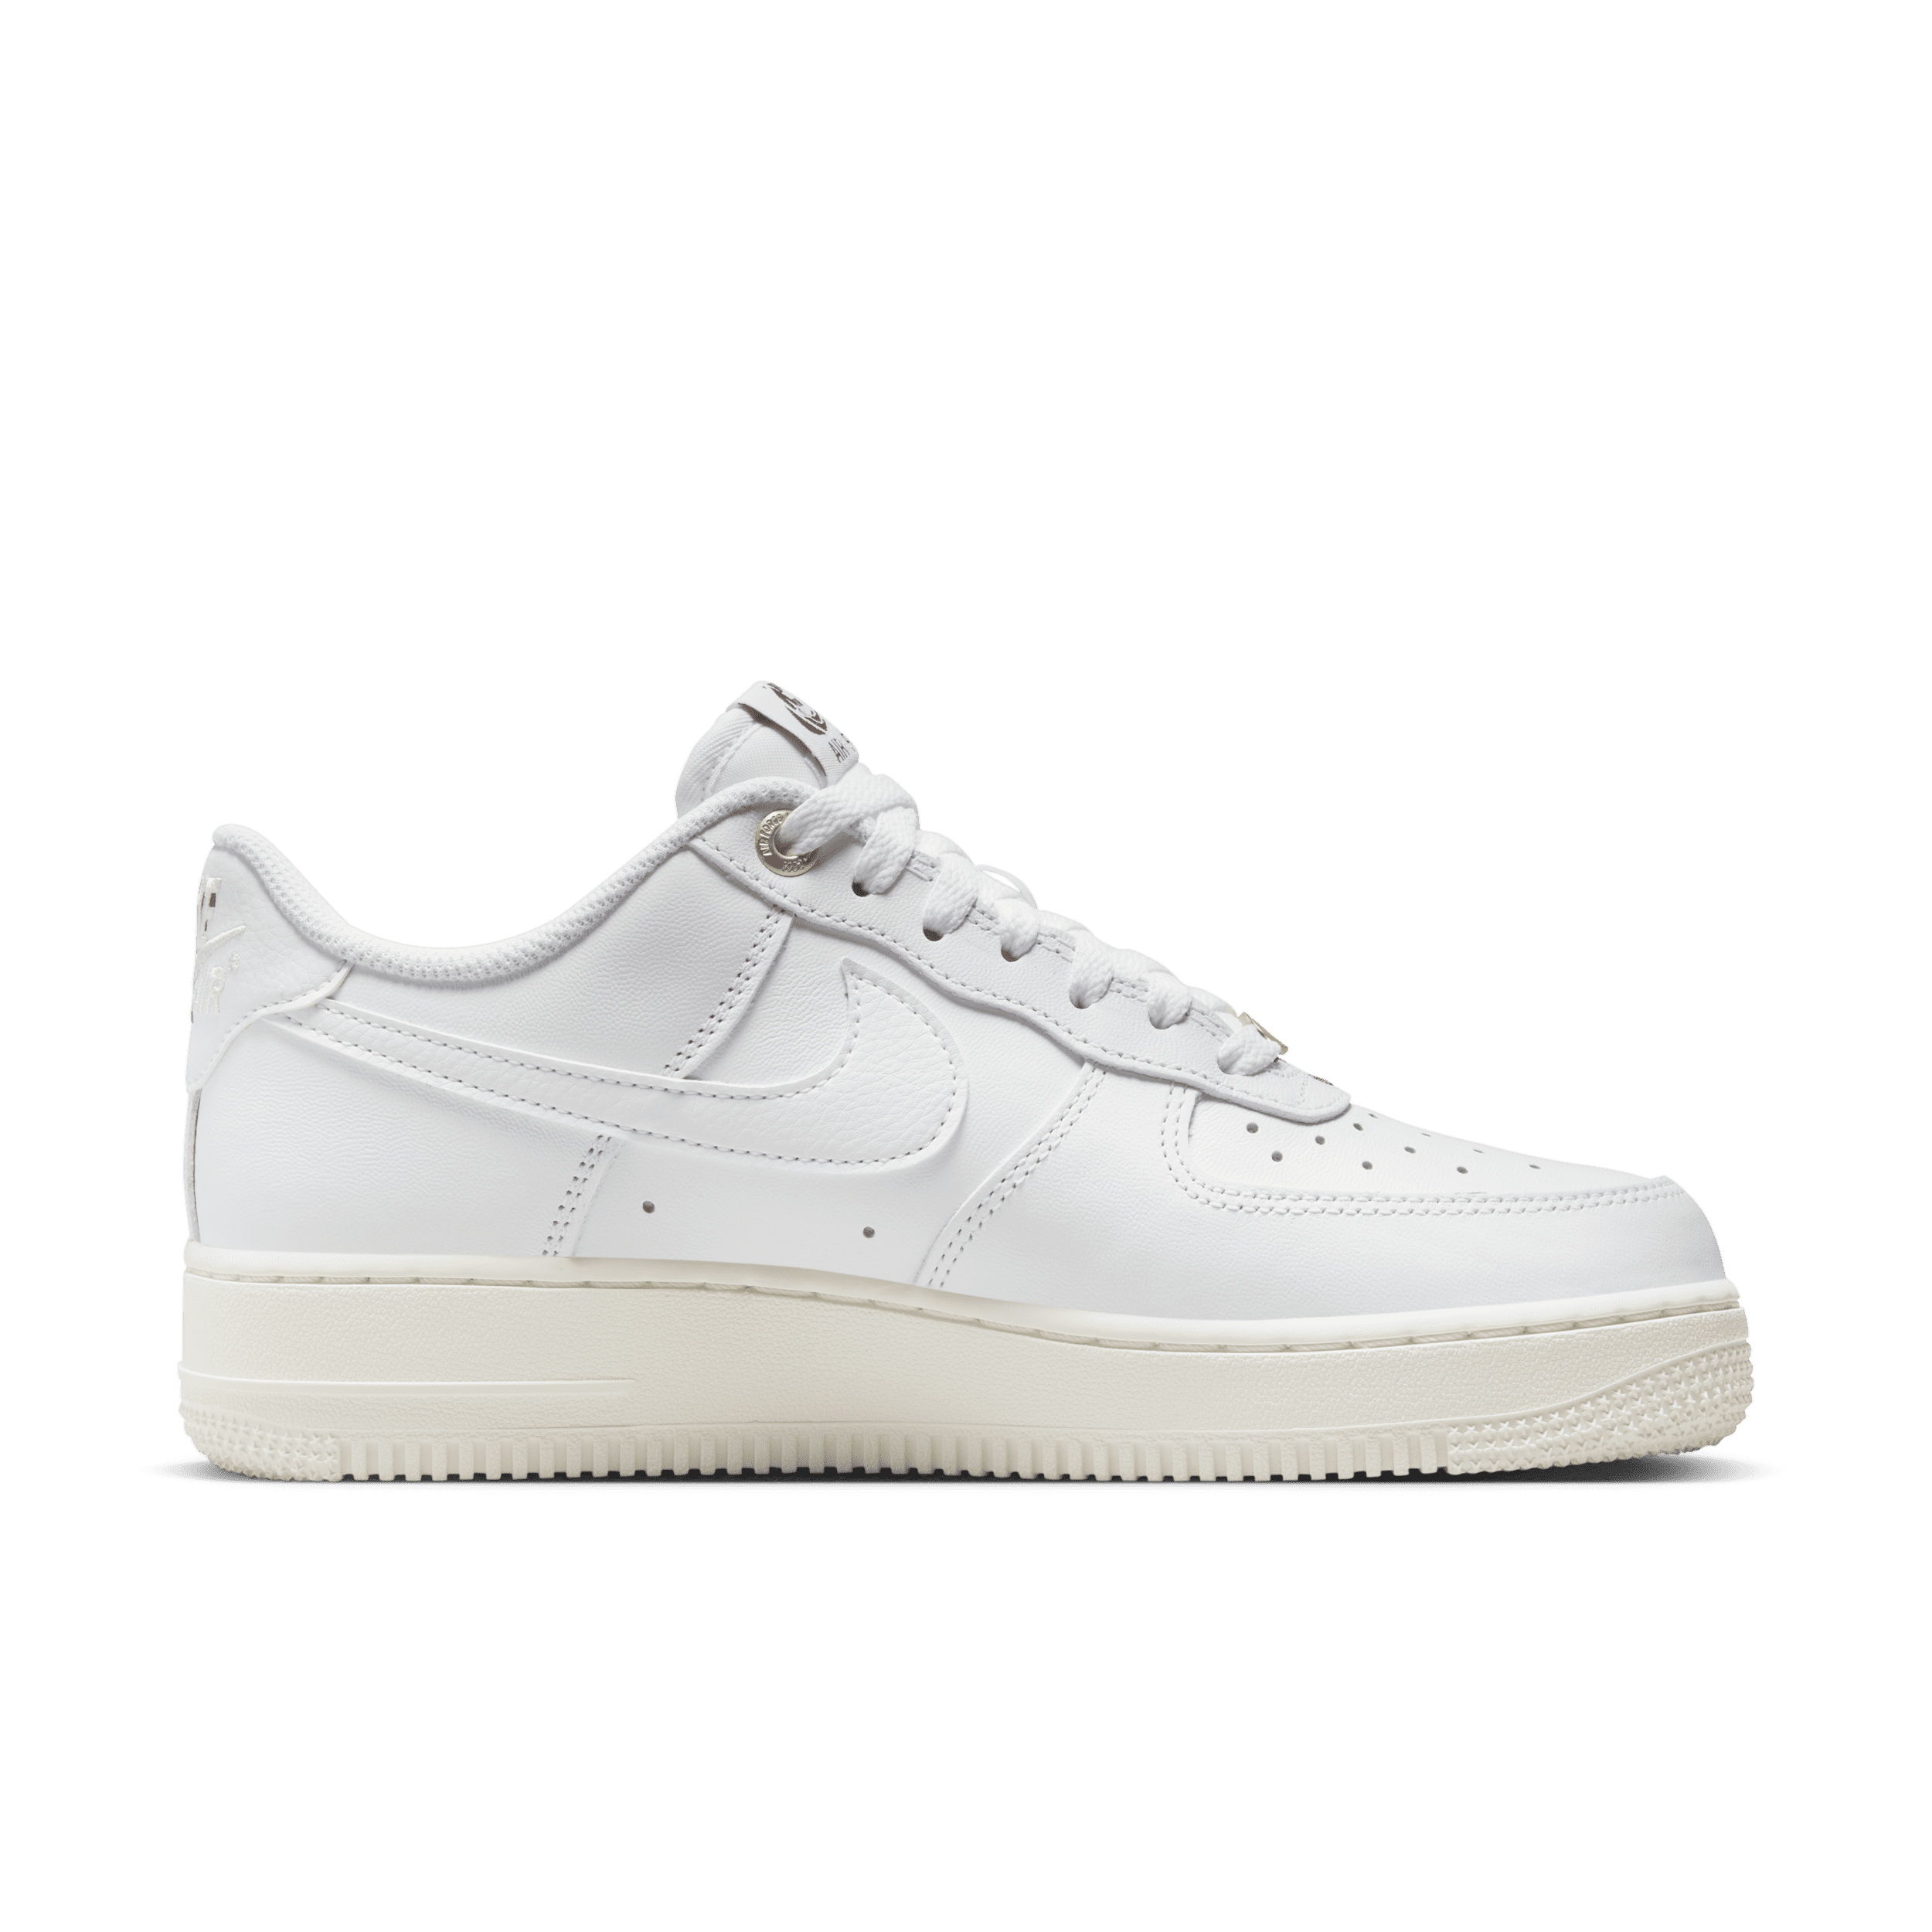 Nike Air Force 1 '07 Premium Damenschuh - Weiß